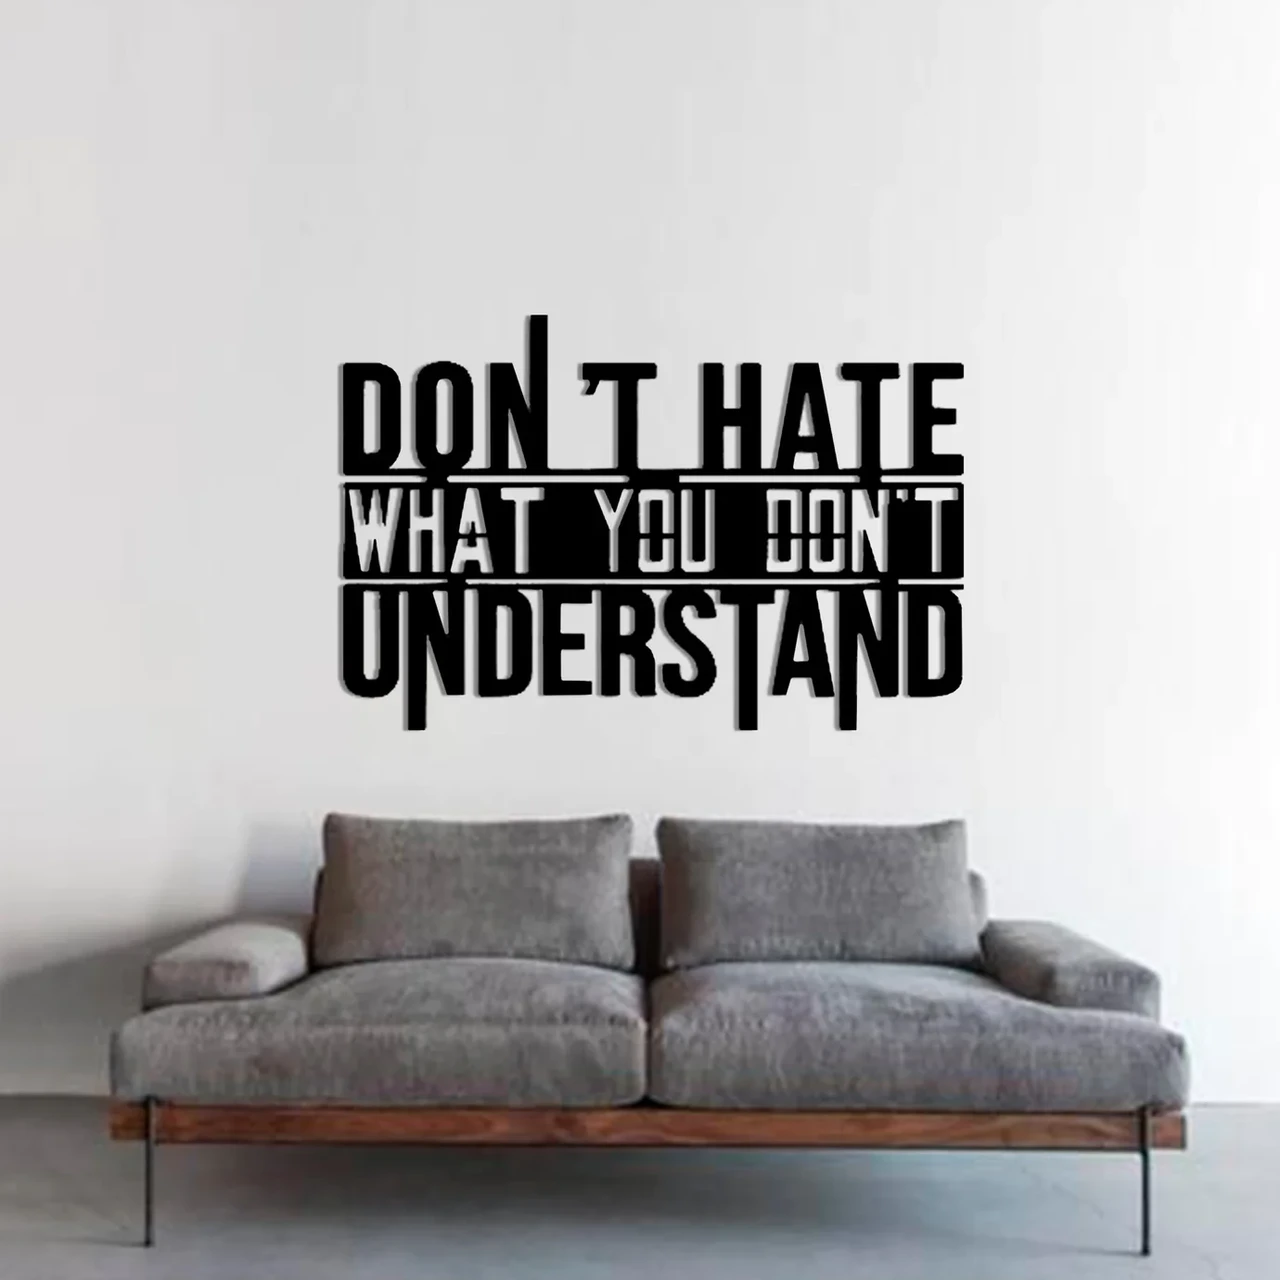 Фігурна картина з дерева, Розмір: 50*33 см Напис: Don't hate what you don't understand